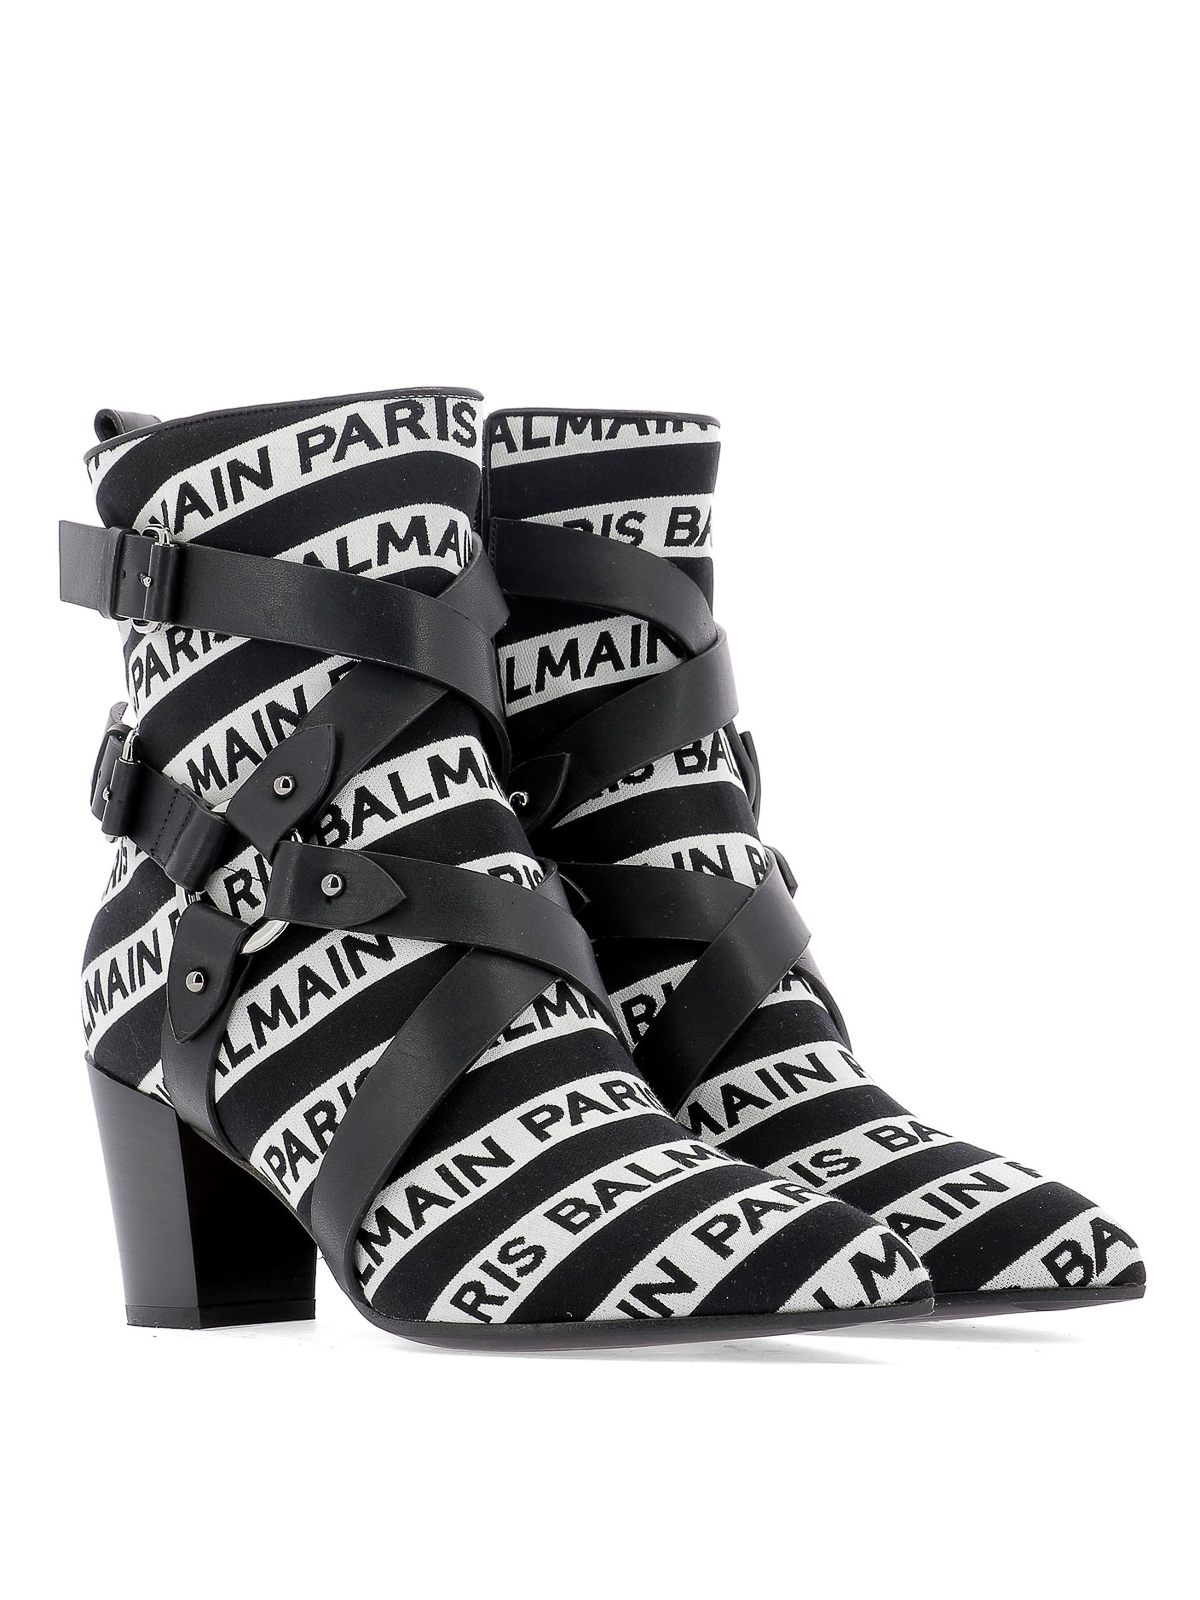 Timeless Trends: Introducing the Balmain Jilly Boots